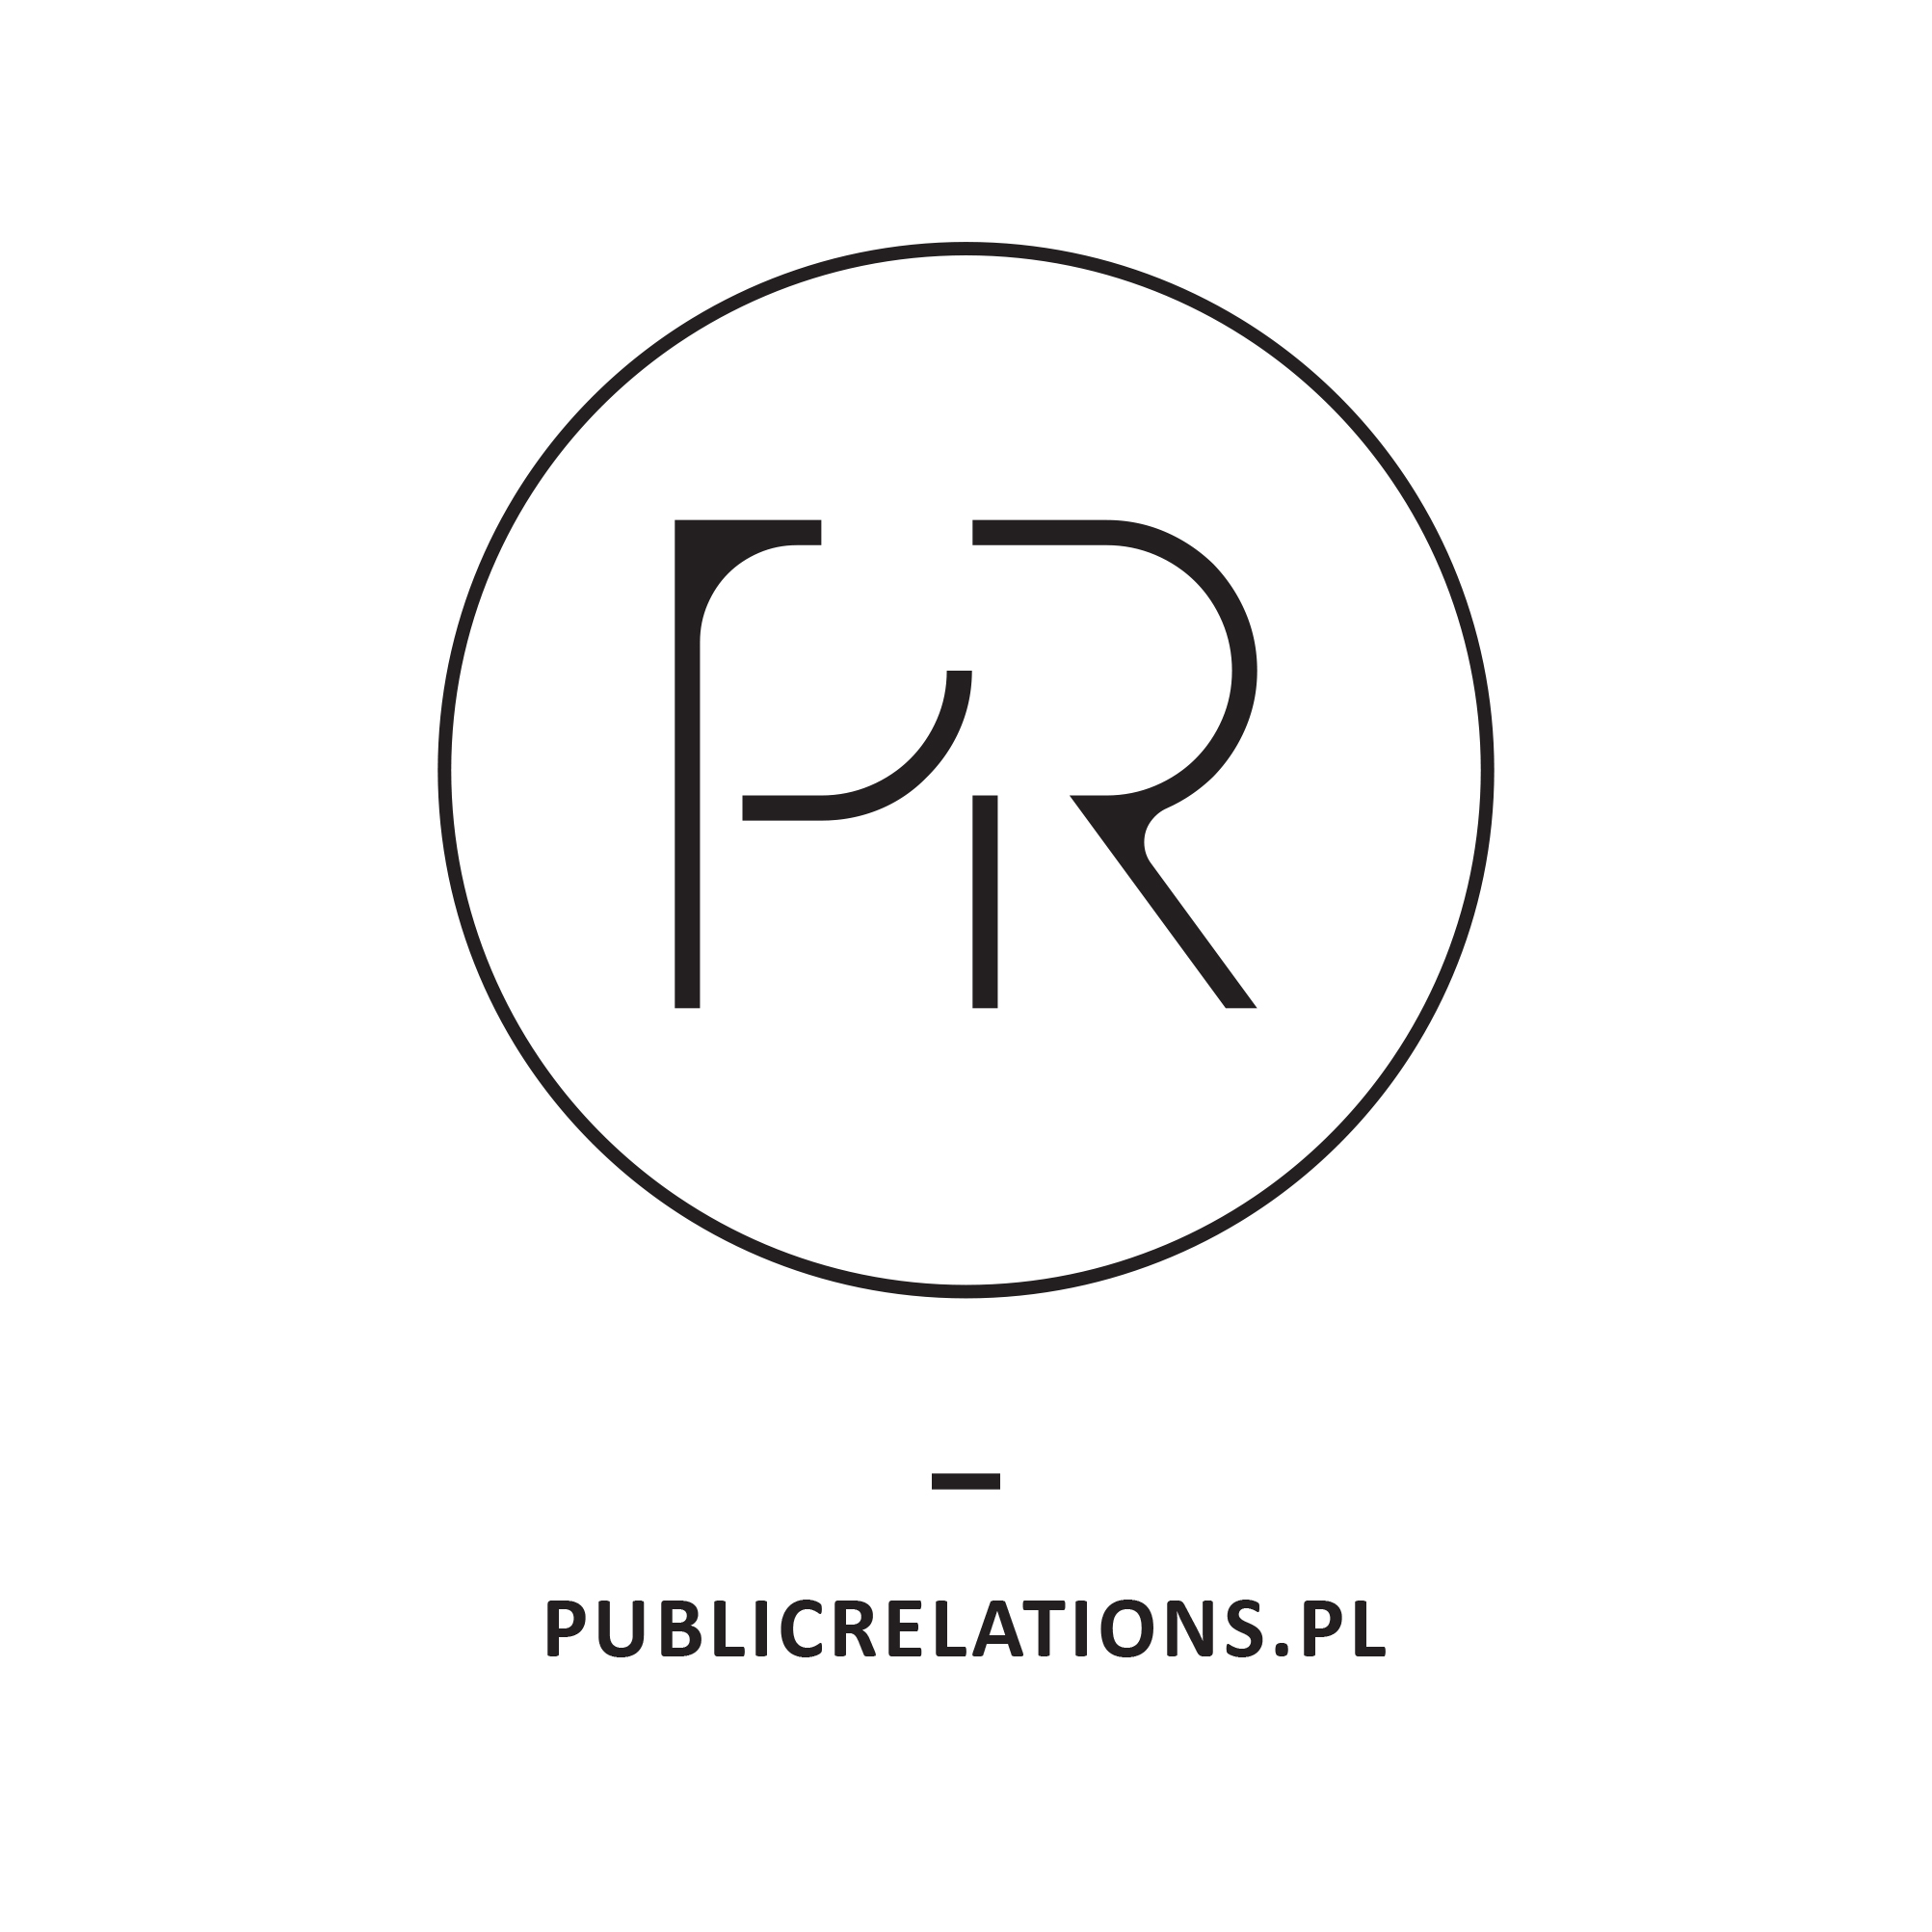 Public relations logo